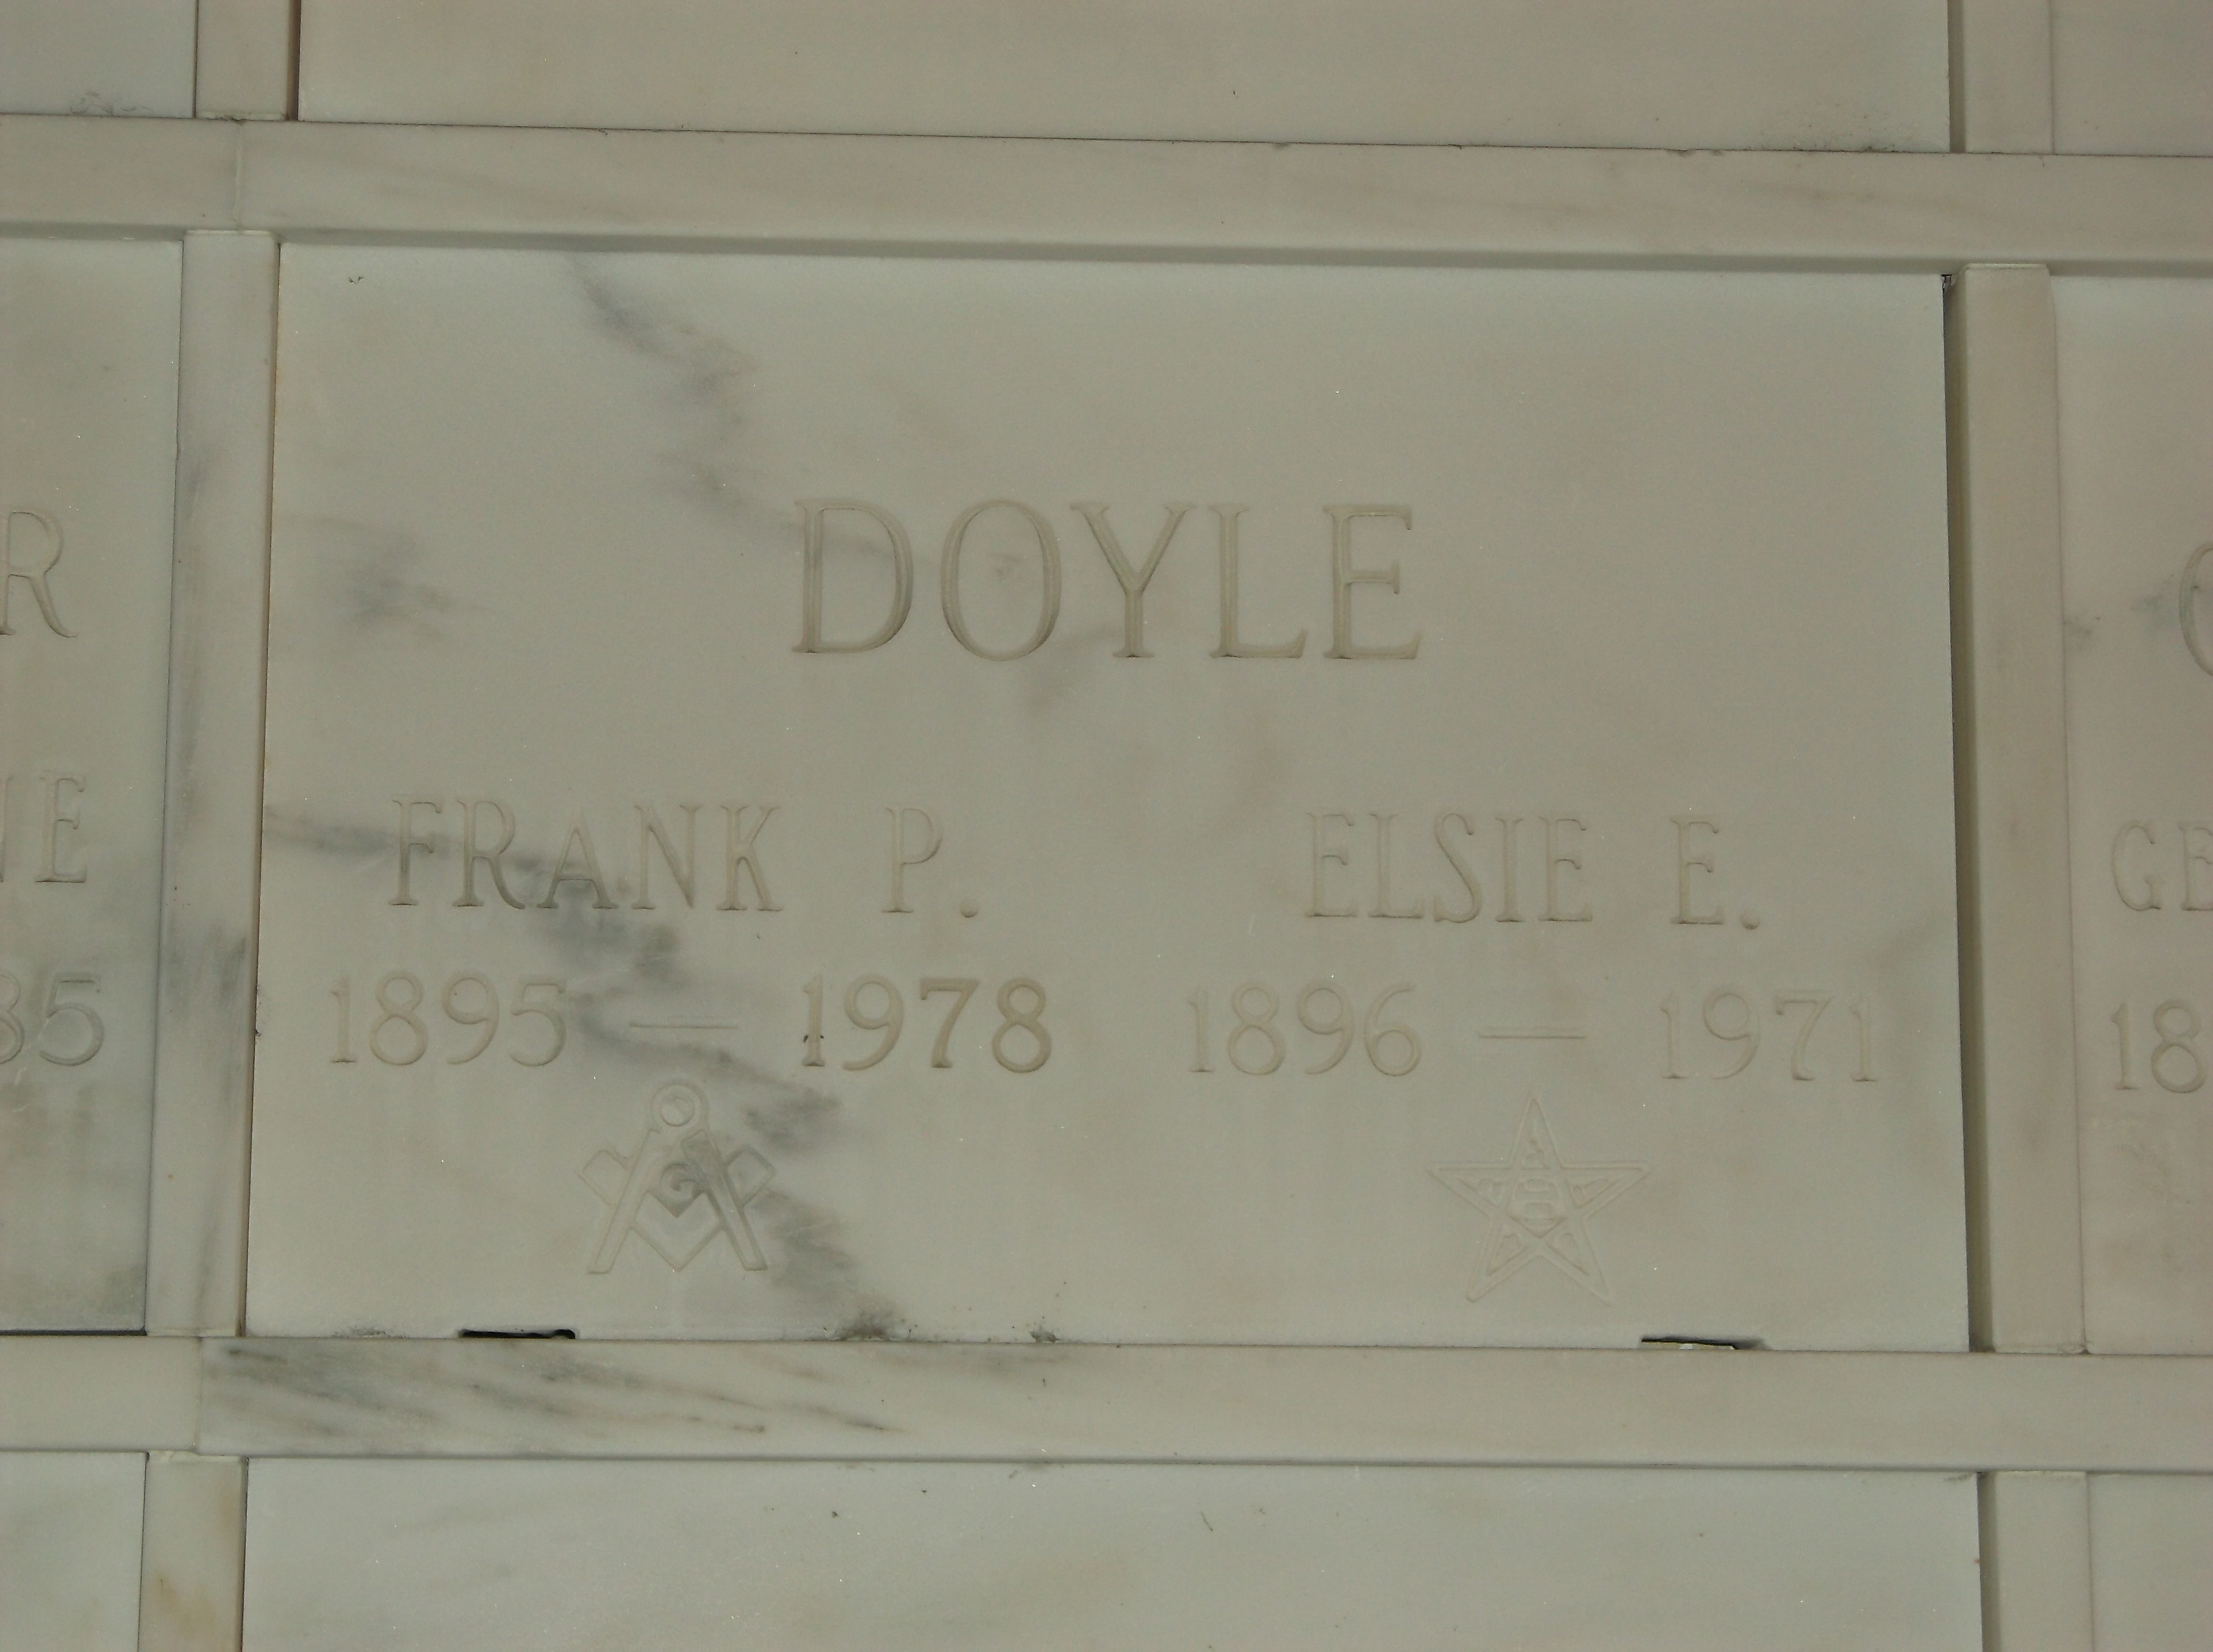 Elsie E Doyle